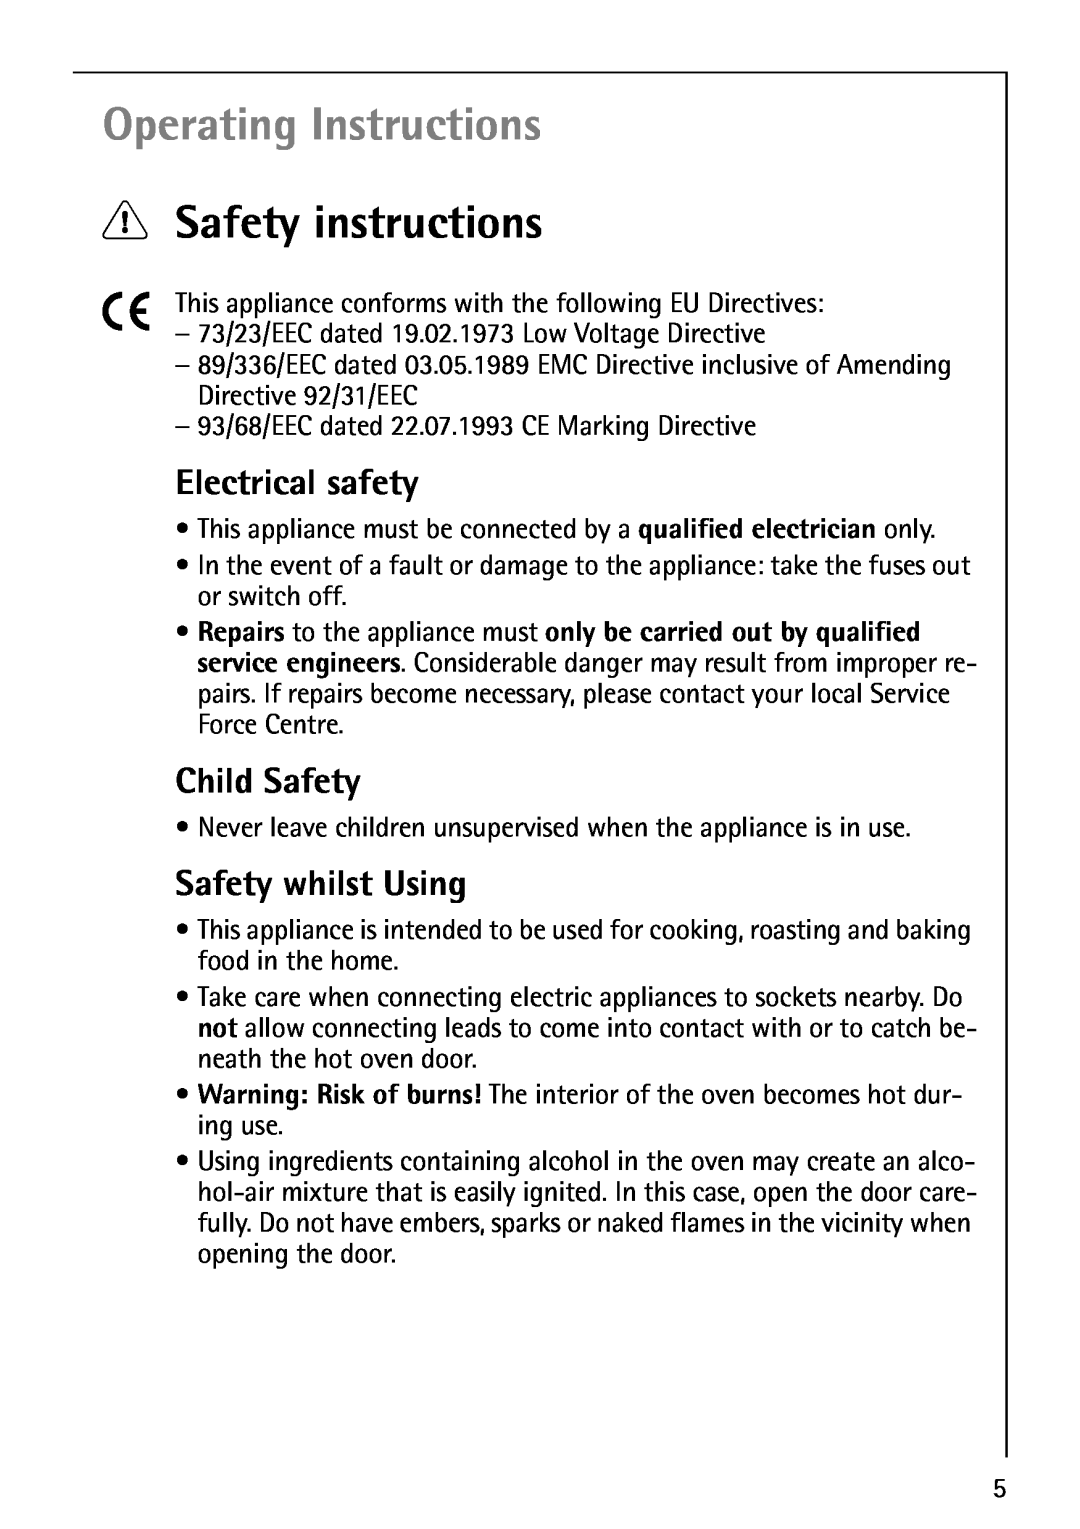 AEG B1180-4 manual Operating Instructions, 1Safety instructions, Electrical safety, Child Safety, Safety whilst Using 